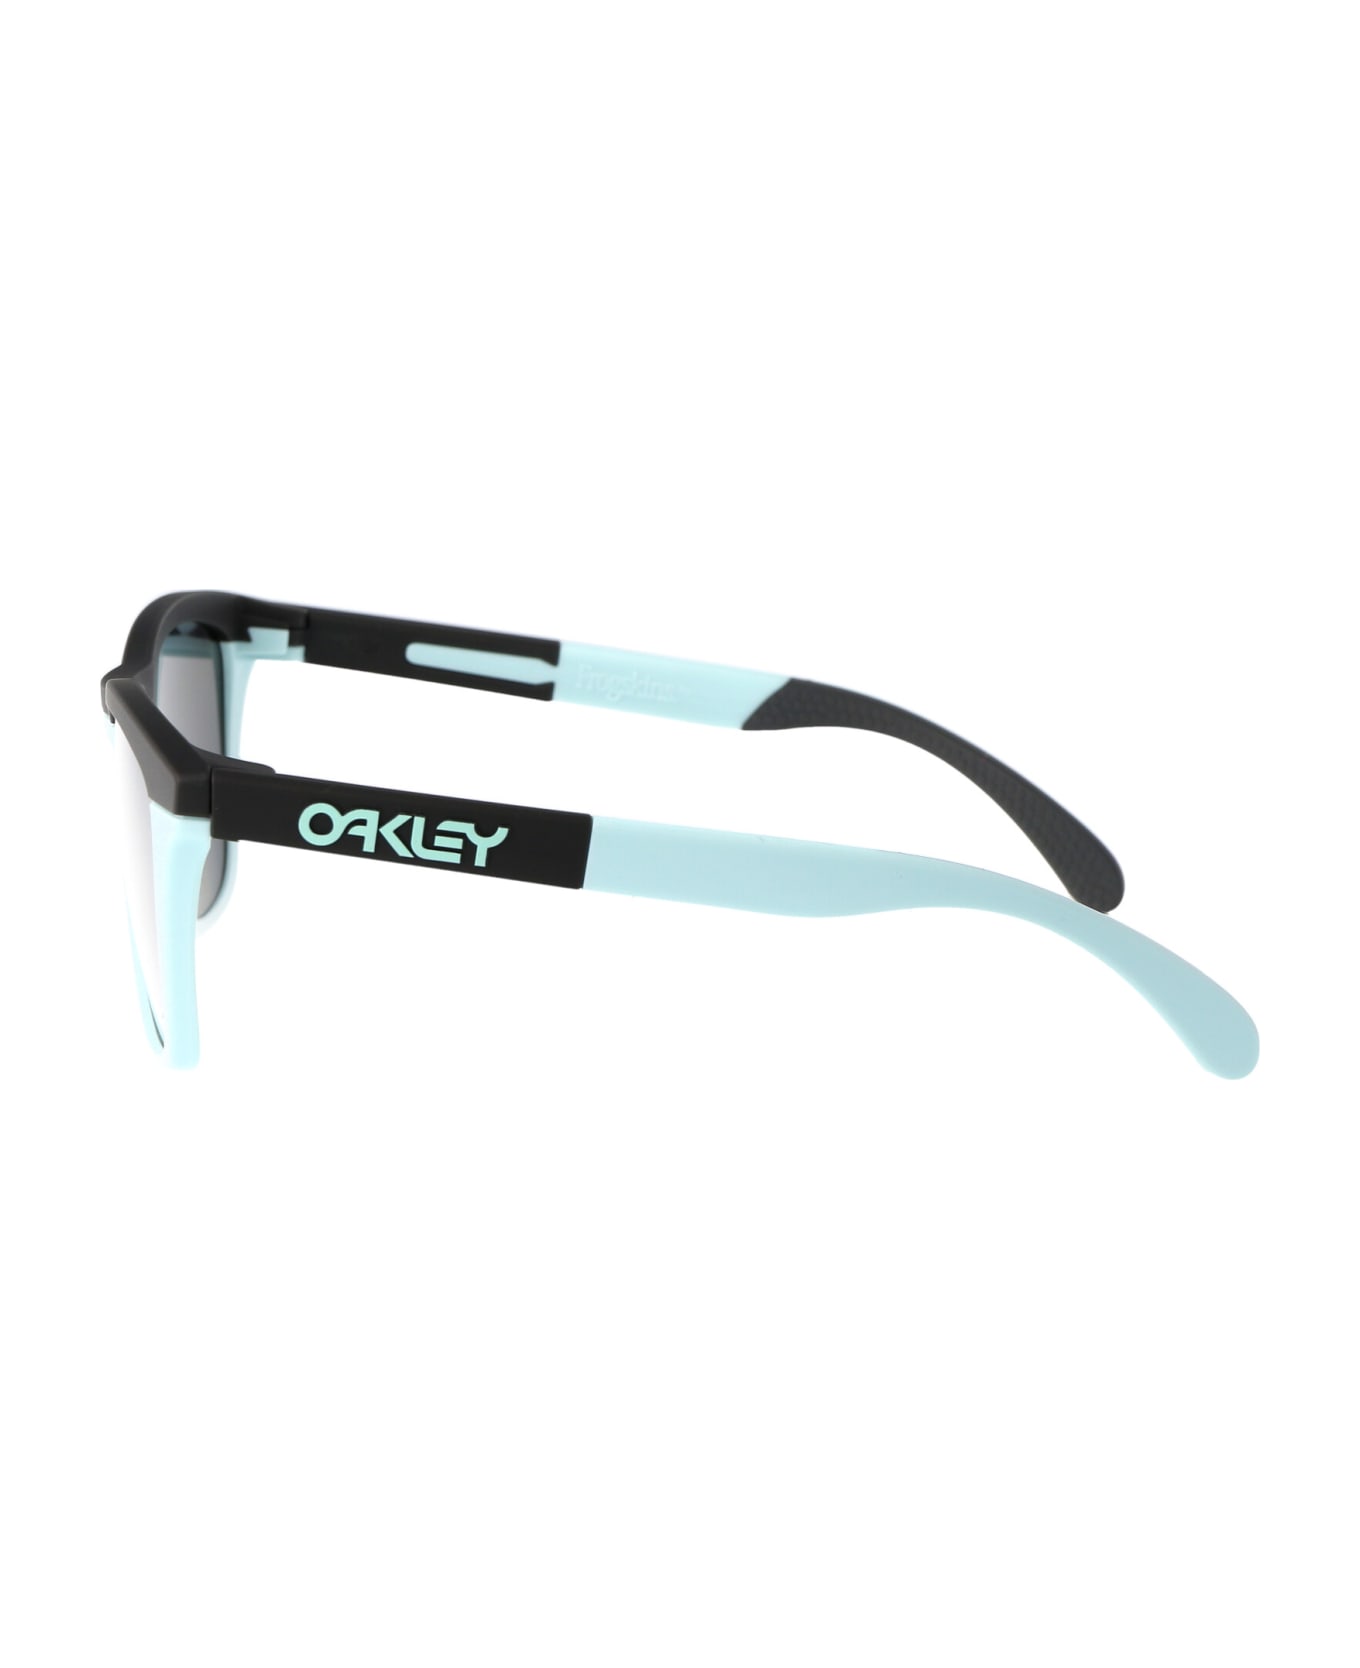 Oakley Frogskins Range Sunglasses - 928403 Matte Carbon/Blue Milkshake